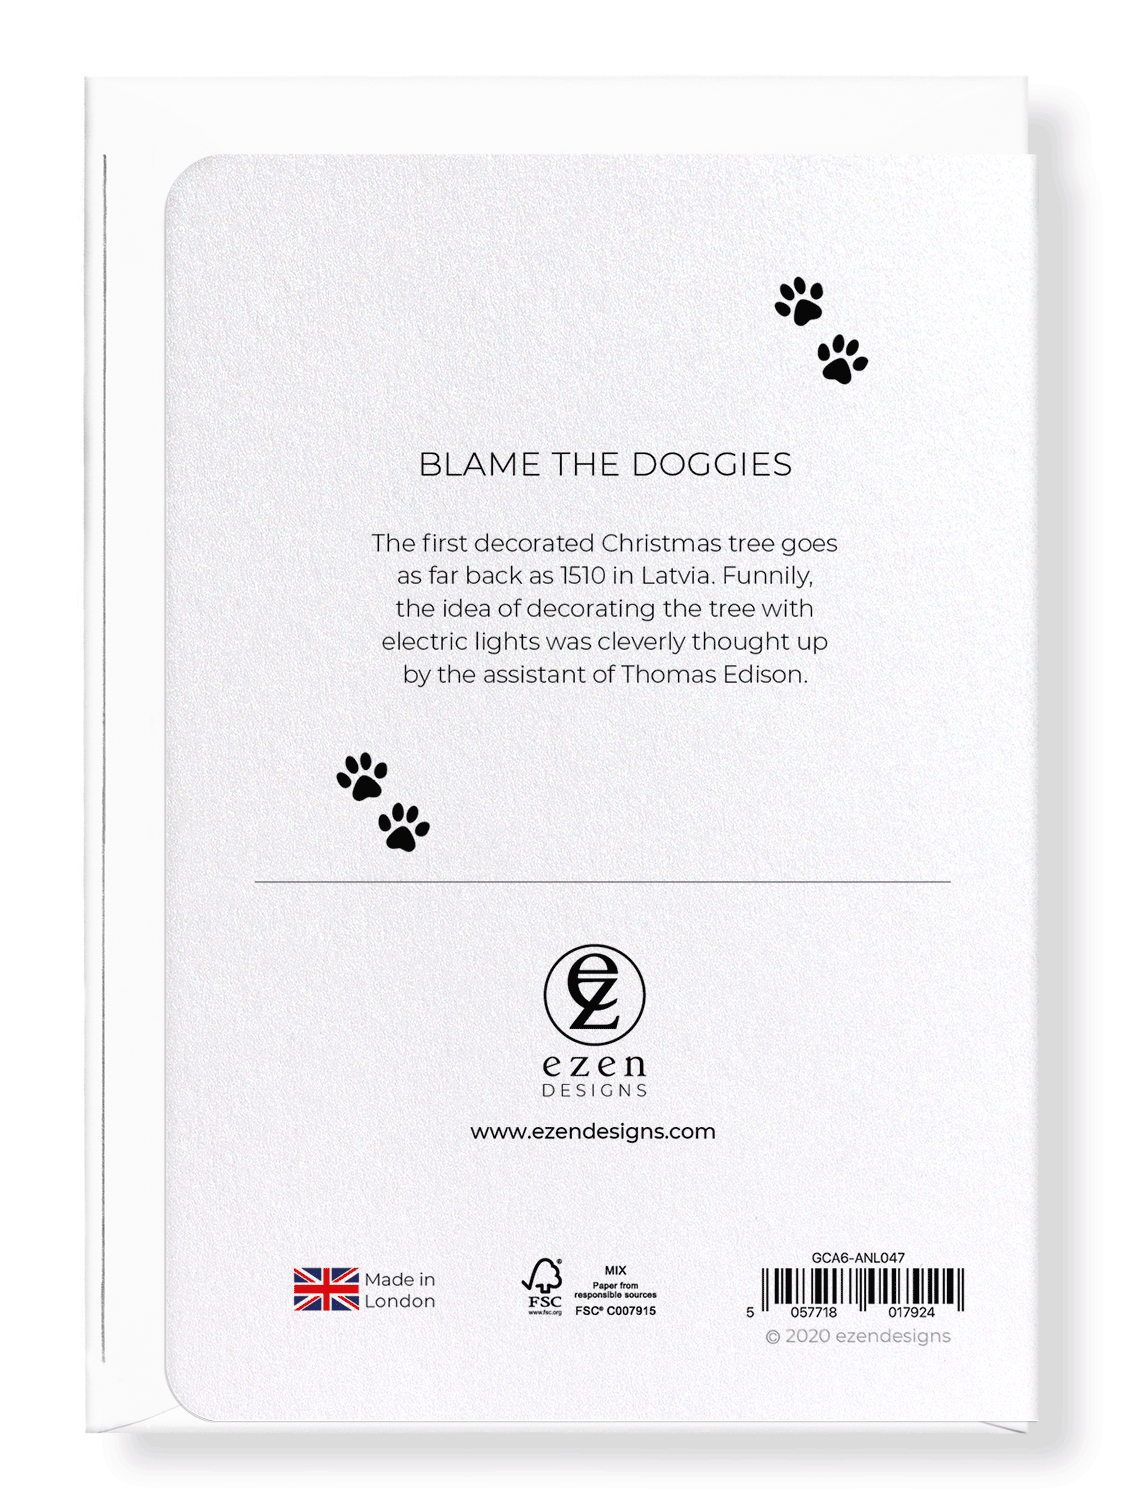 Ezen Designs - Blame the doggies - Greeting Card - Back